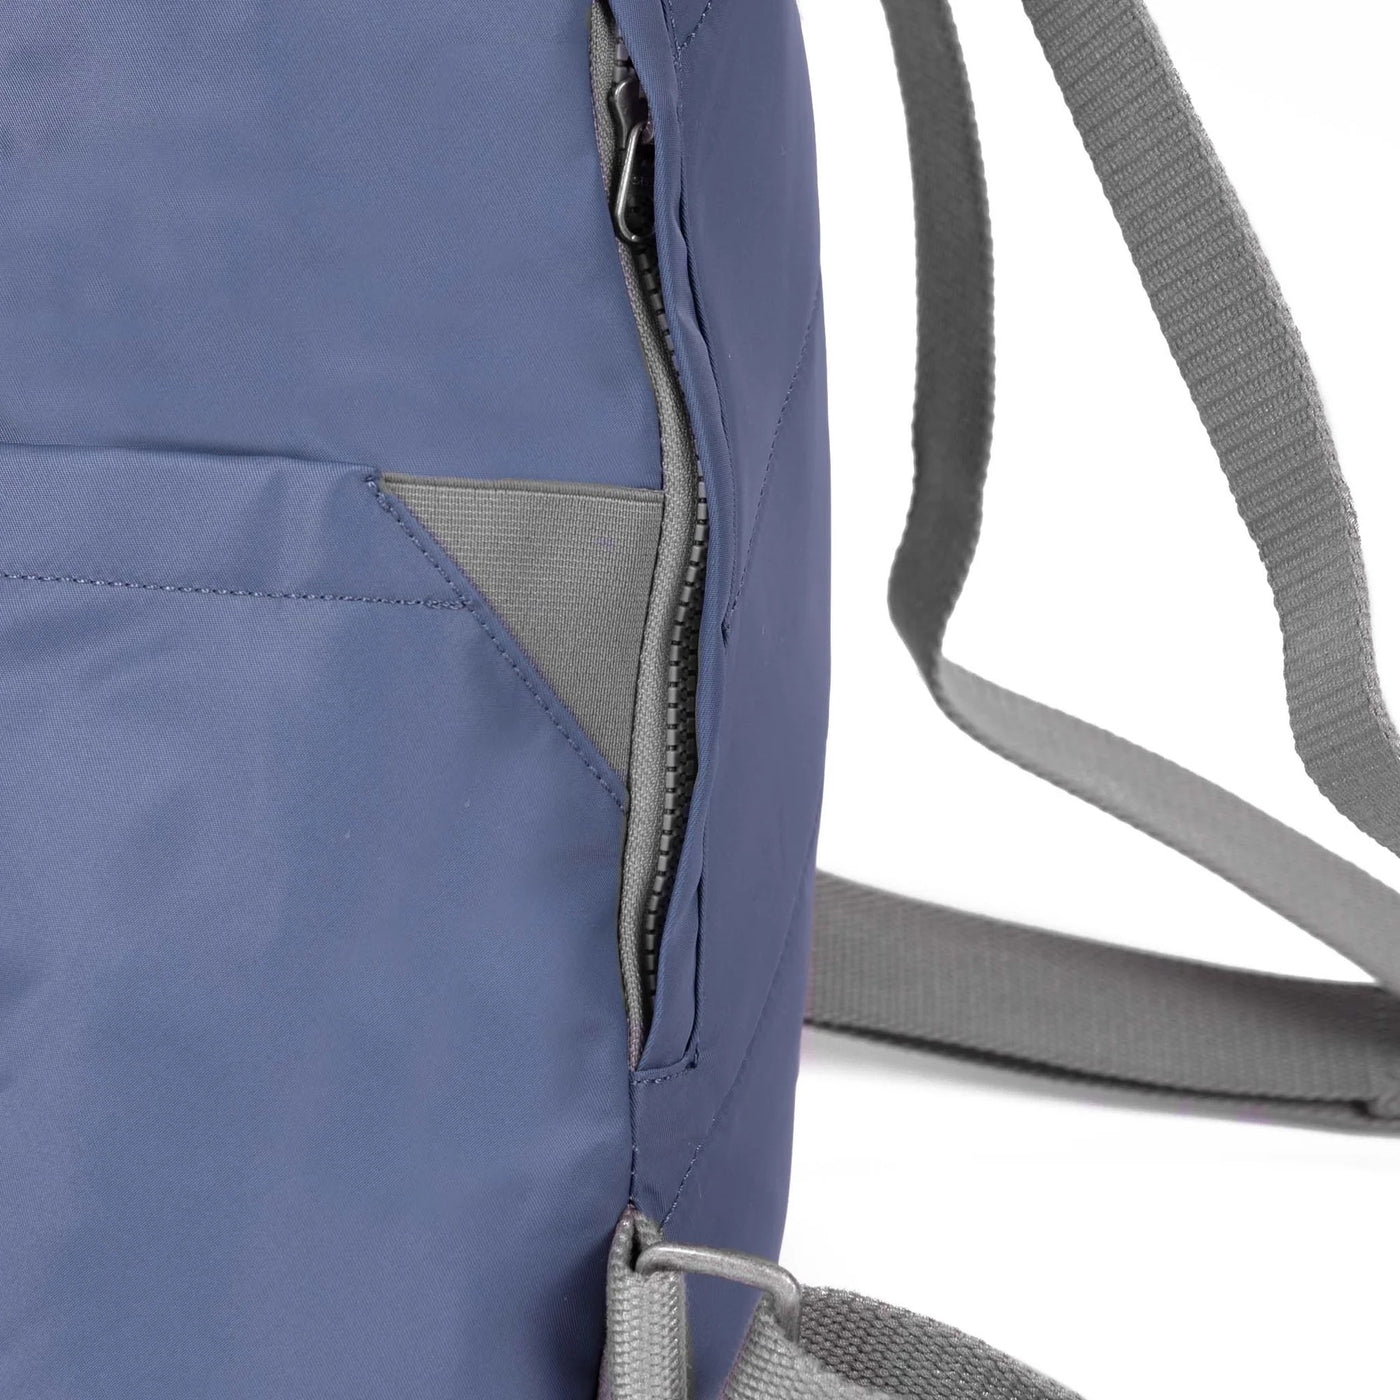 Roka Canfield B Medium Backpack - Recycled Nylon - Airforce Blue